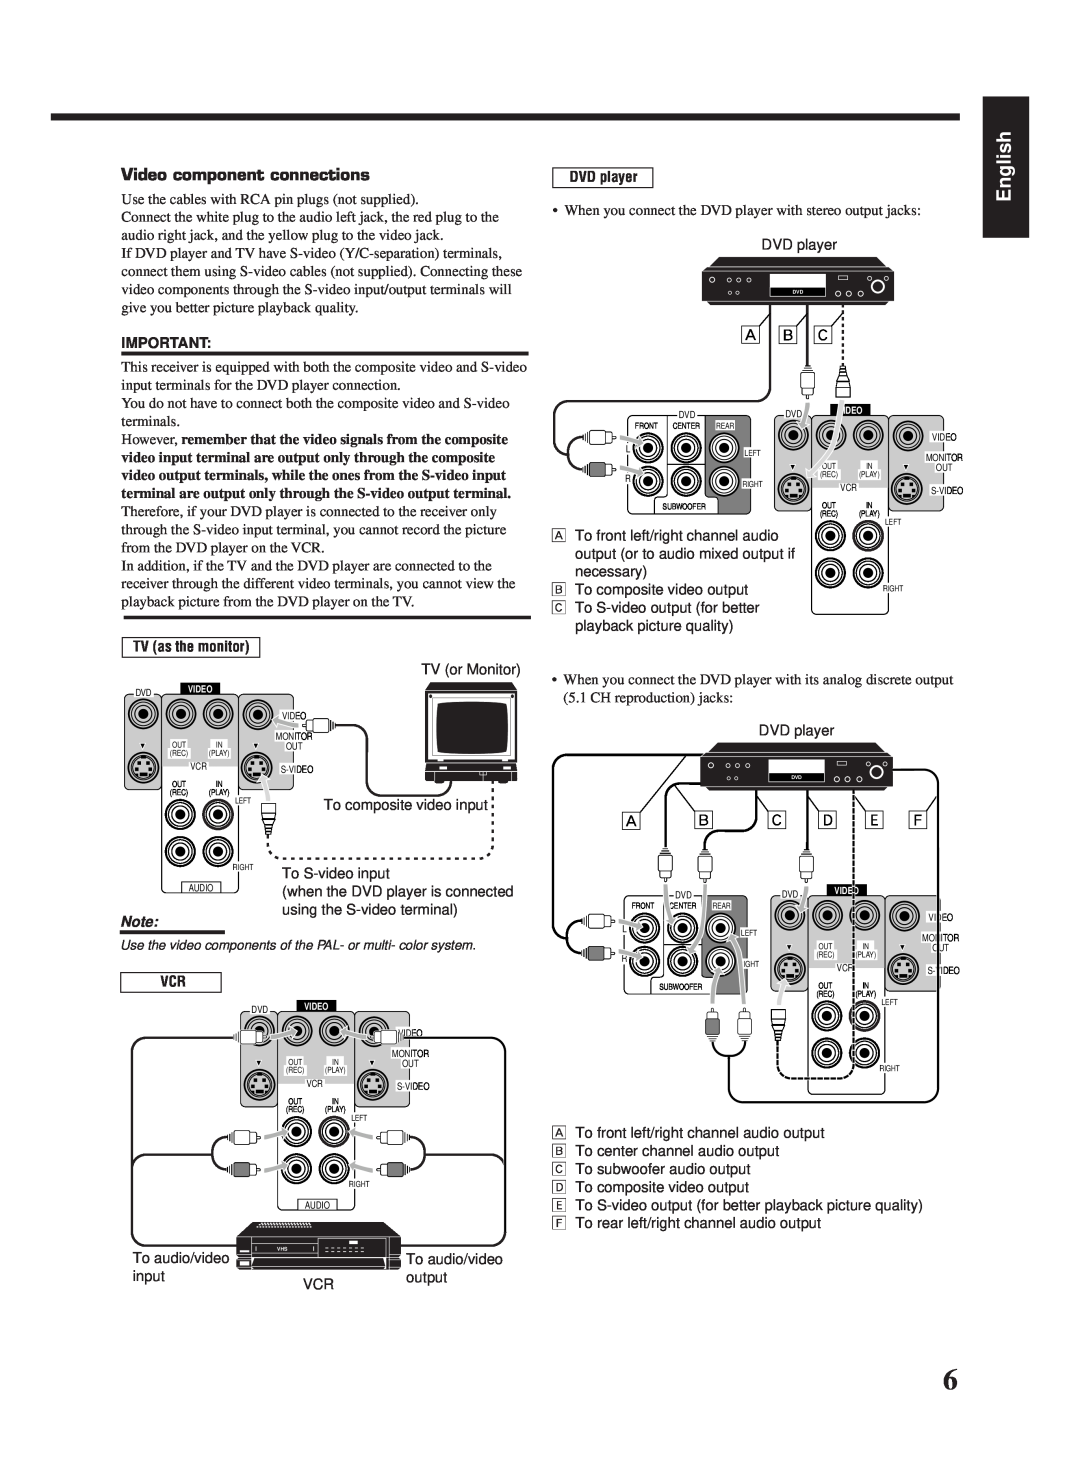 JVC RX-668RBK manual English,  ı ‚ º ä ì, Video component connections, DVD player, TV as the monitor 